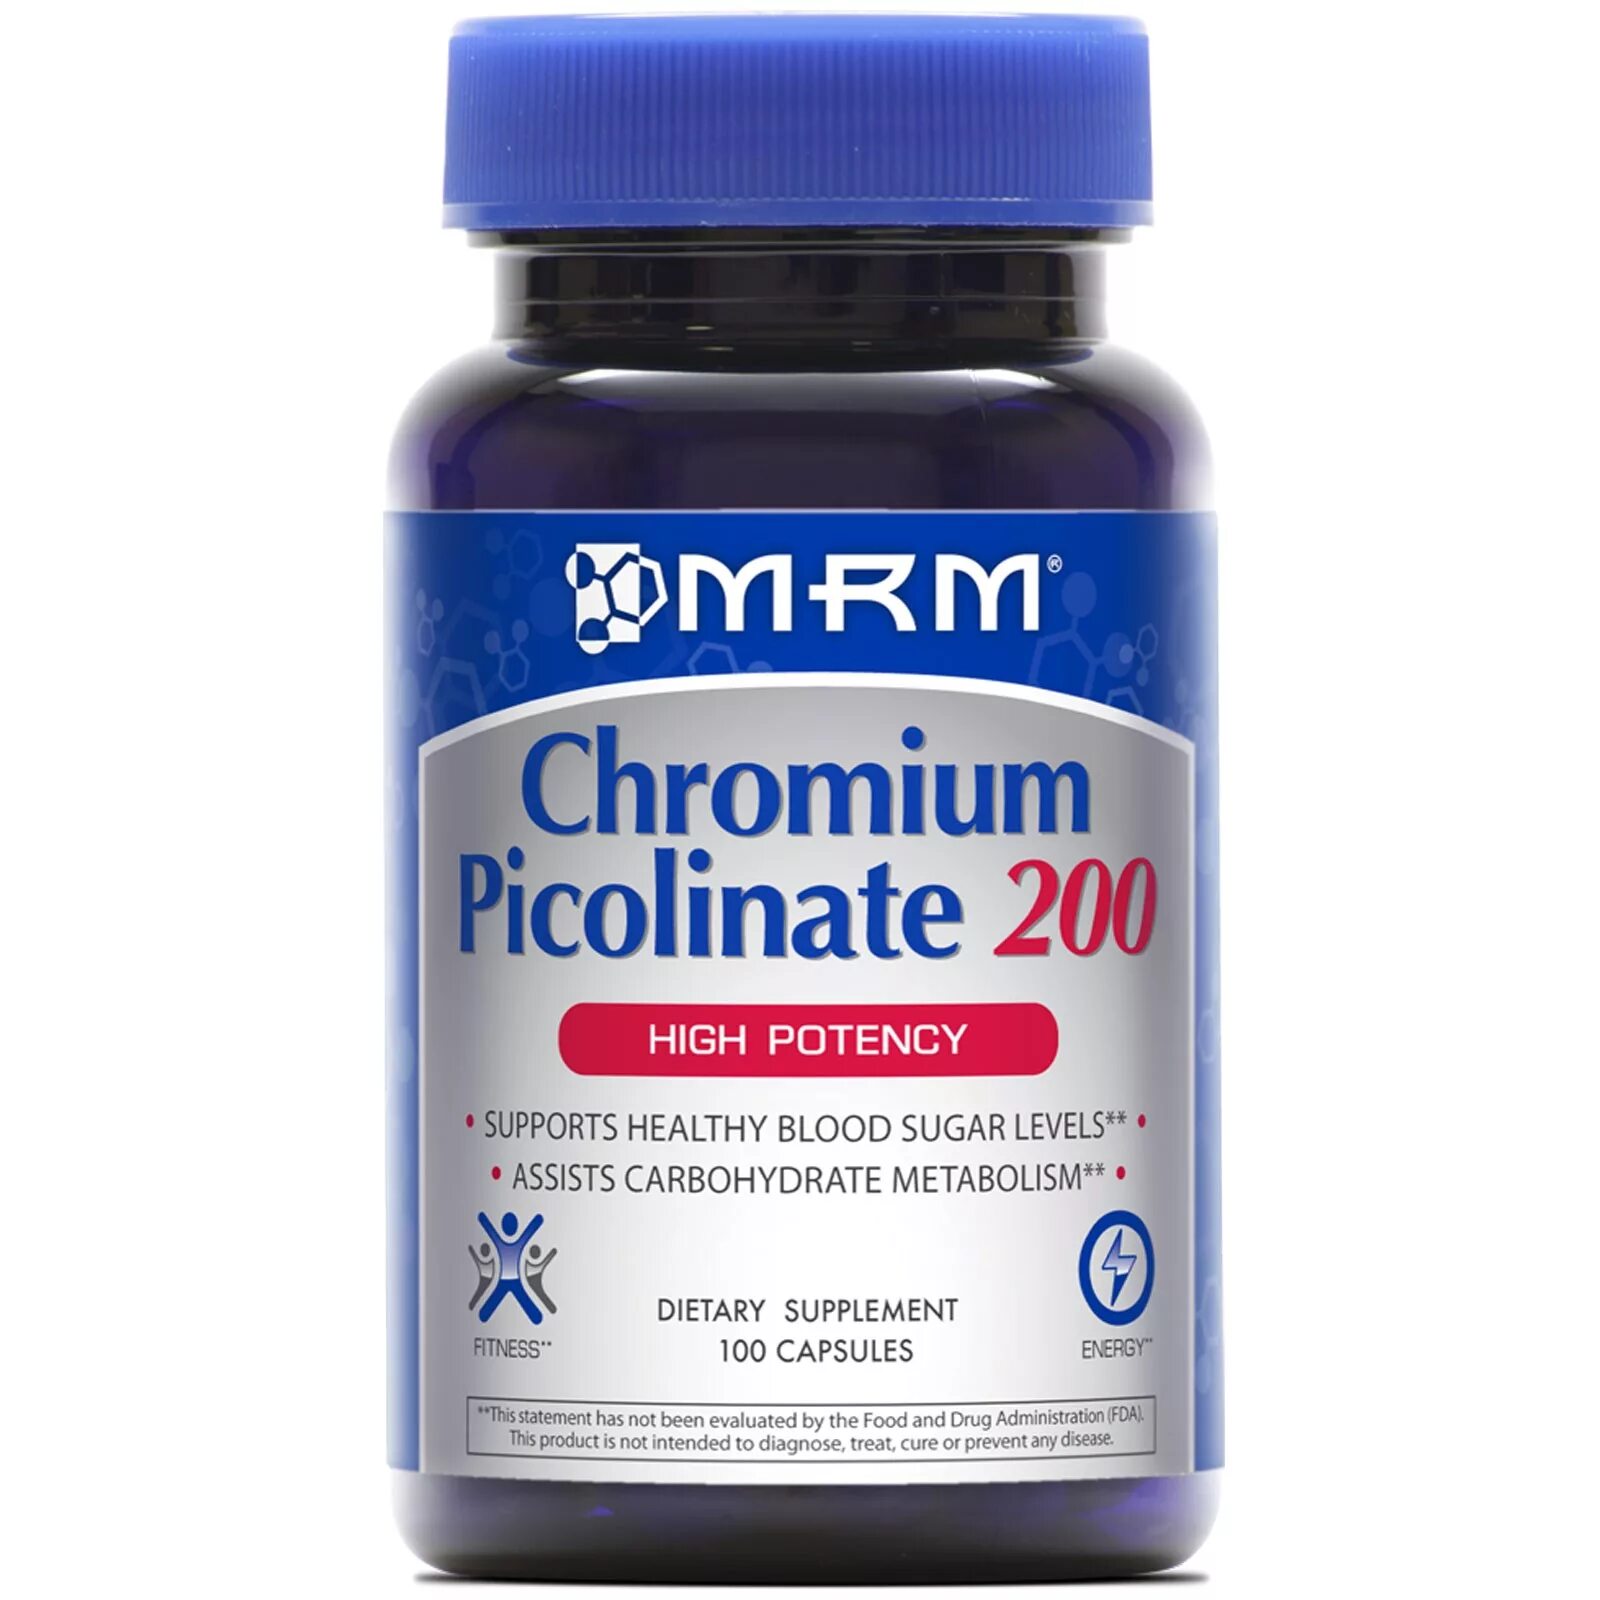 Как принимать таблетки пиколинат. MRM, пиколинат хрома, 200 мкг, 100 капс,. MRM Chromium Picolinate хром 200 мкг 100 капс.. Chromium Picolinate 200 капсулы. MRM пиколинат хрома.